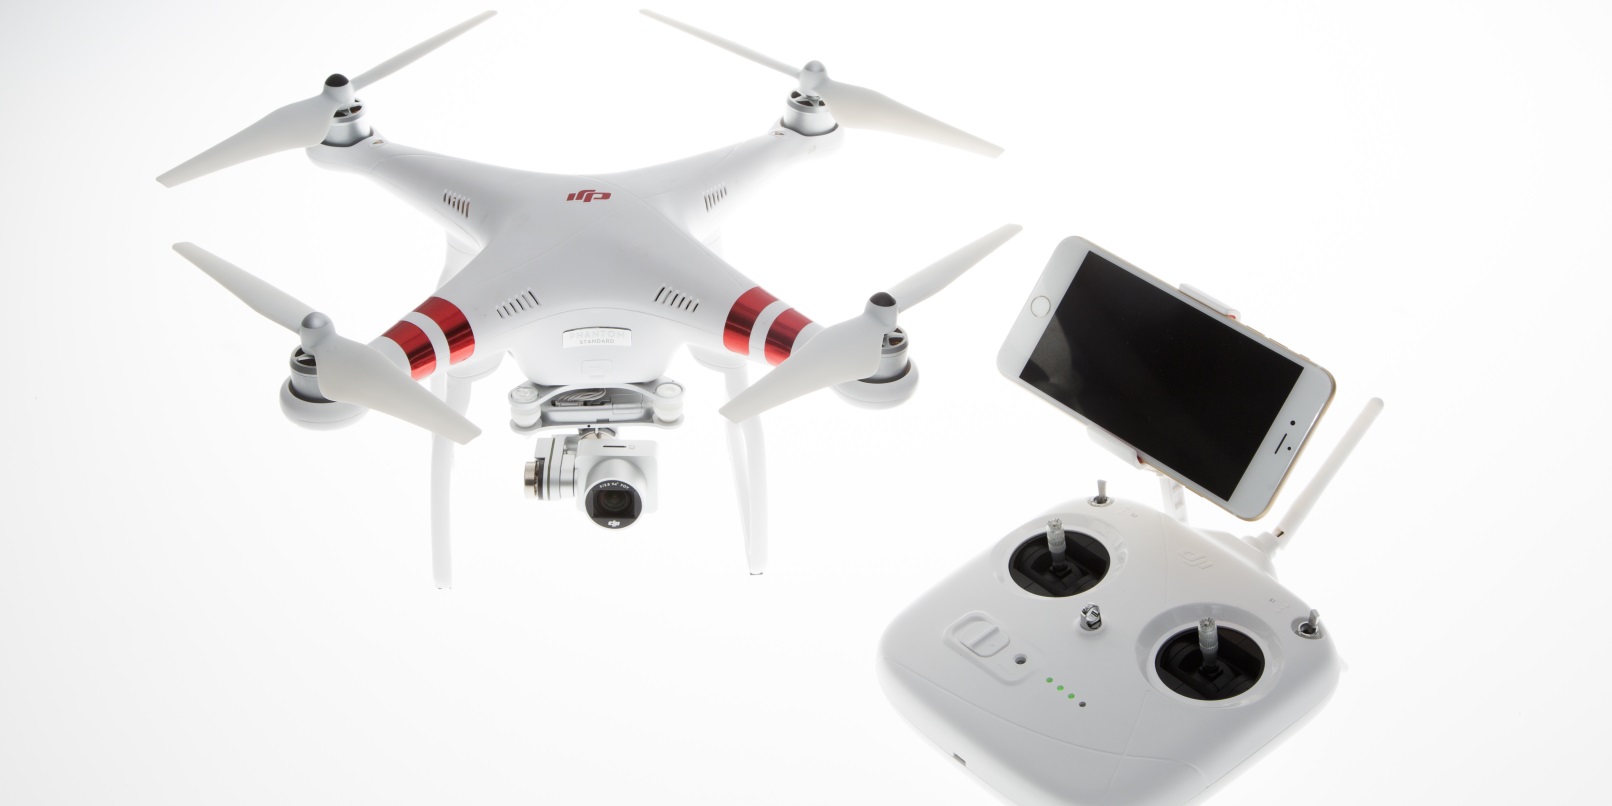 mkmeorg got a new Phantom 3 standard drone